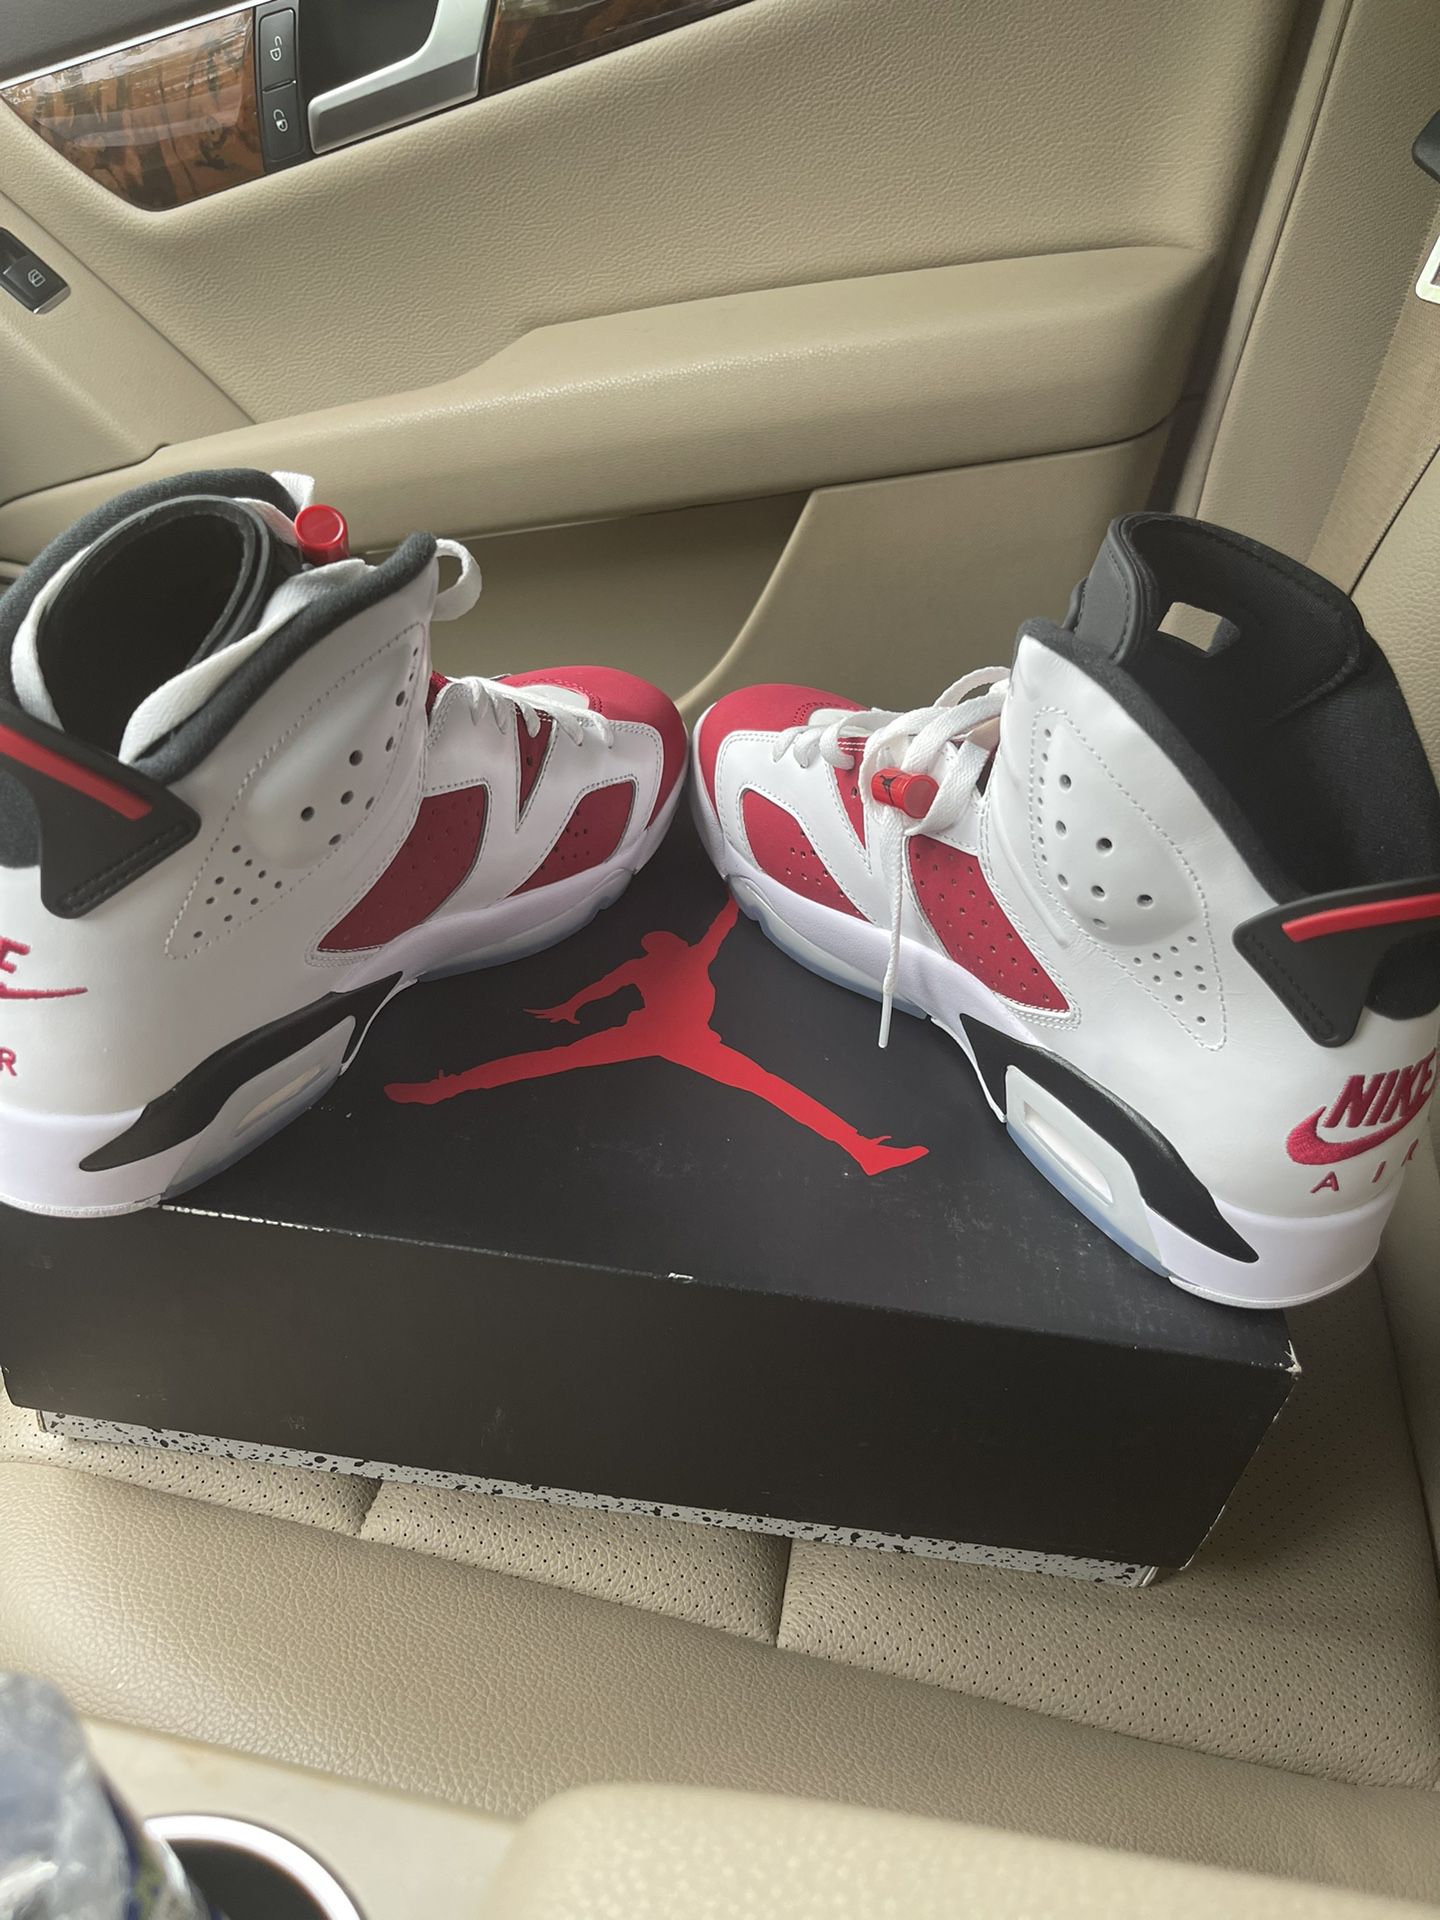 Air Jordan Retro 6 Carmines BRAND NEW Size 9.5